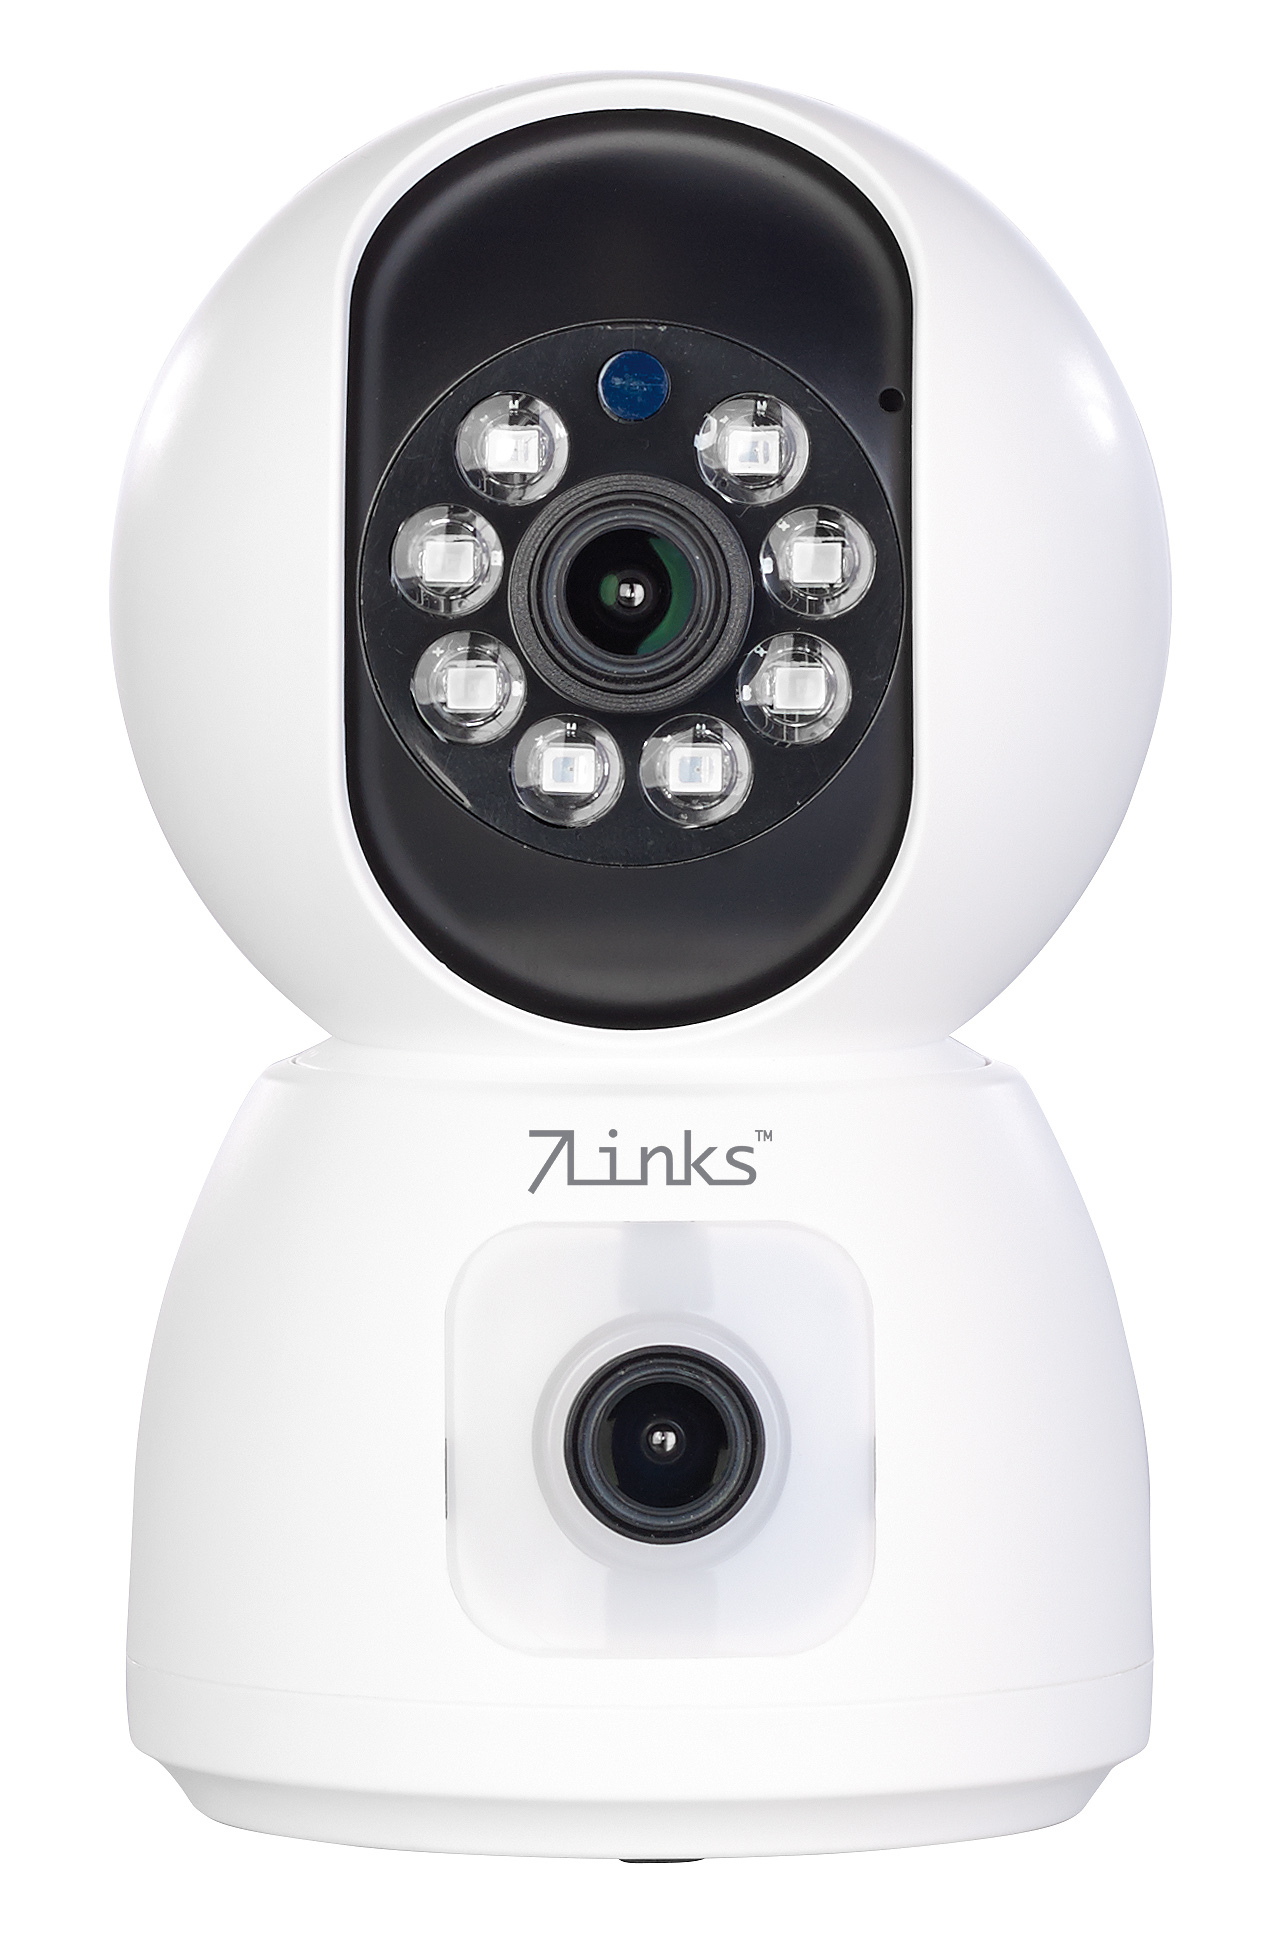 7links Dual-Linsen-WLAN-Kamera IPC-500.duo, je Full HD, Farb-Nachtsicht, Tracking, Sirene